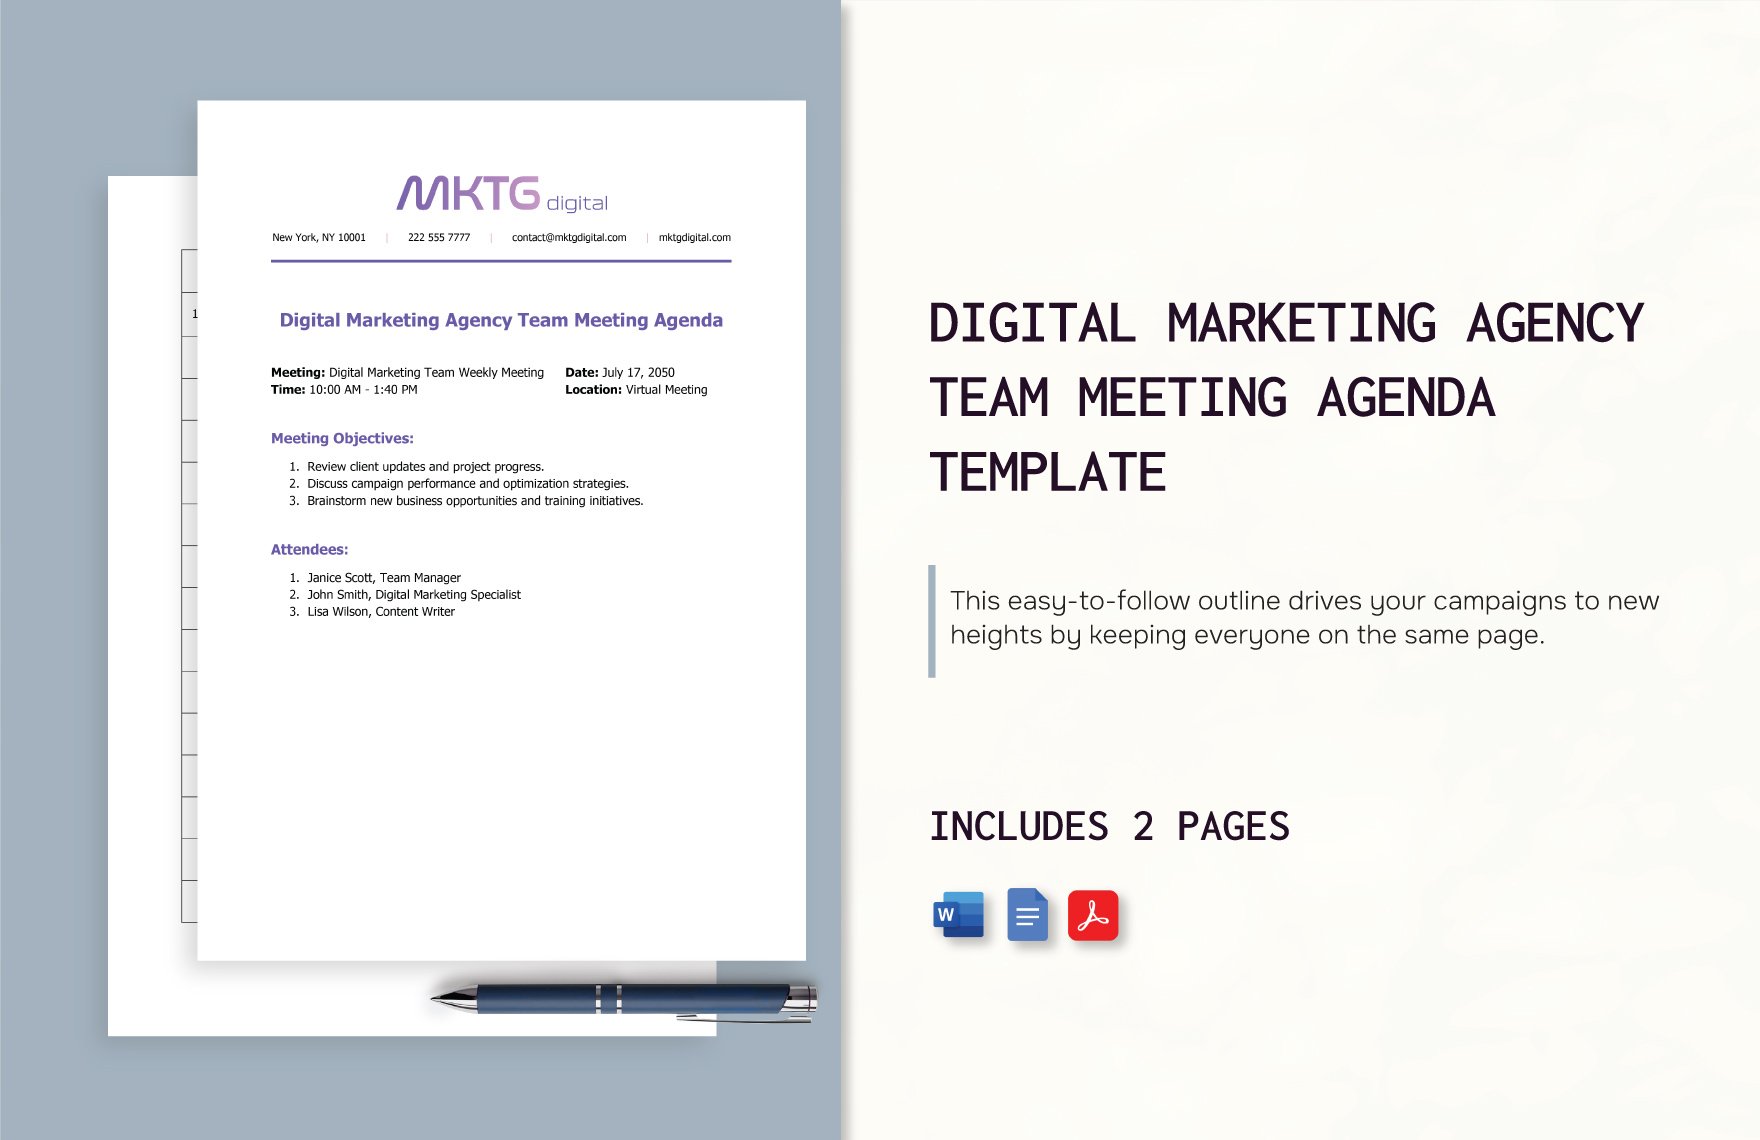 Digital Marketing Agency Team Meeting Agenda Template